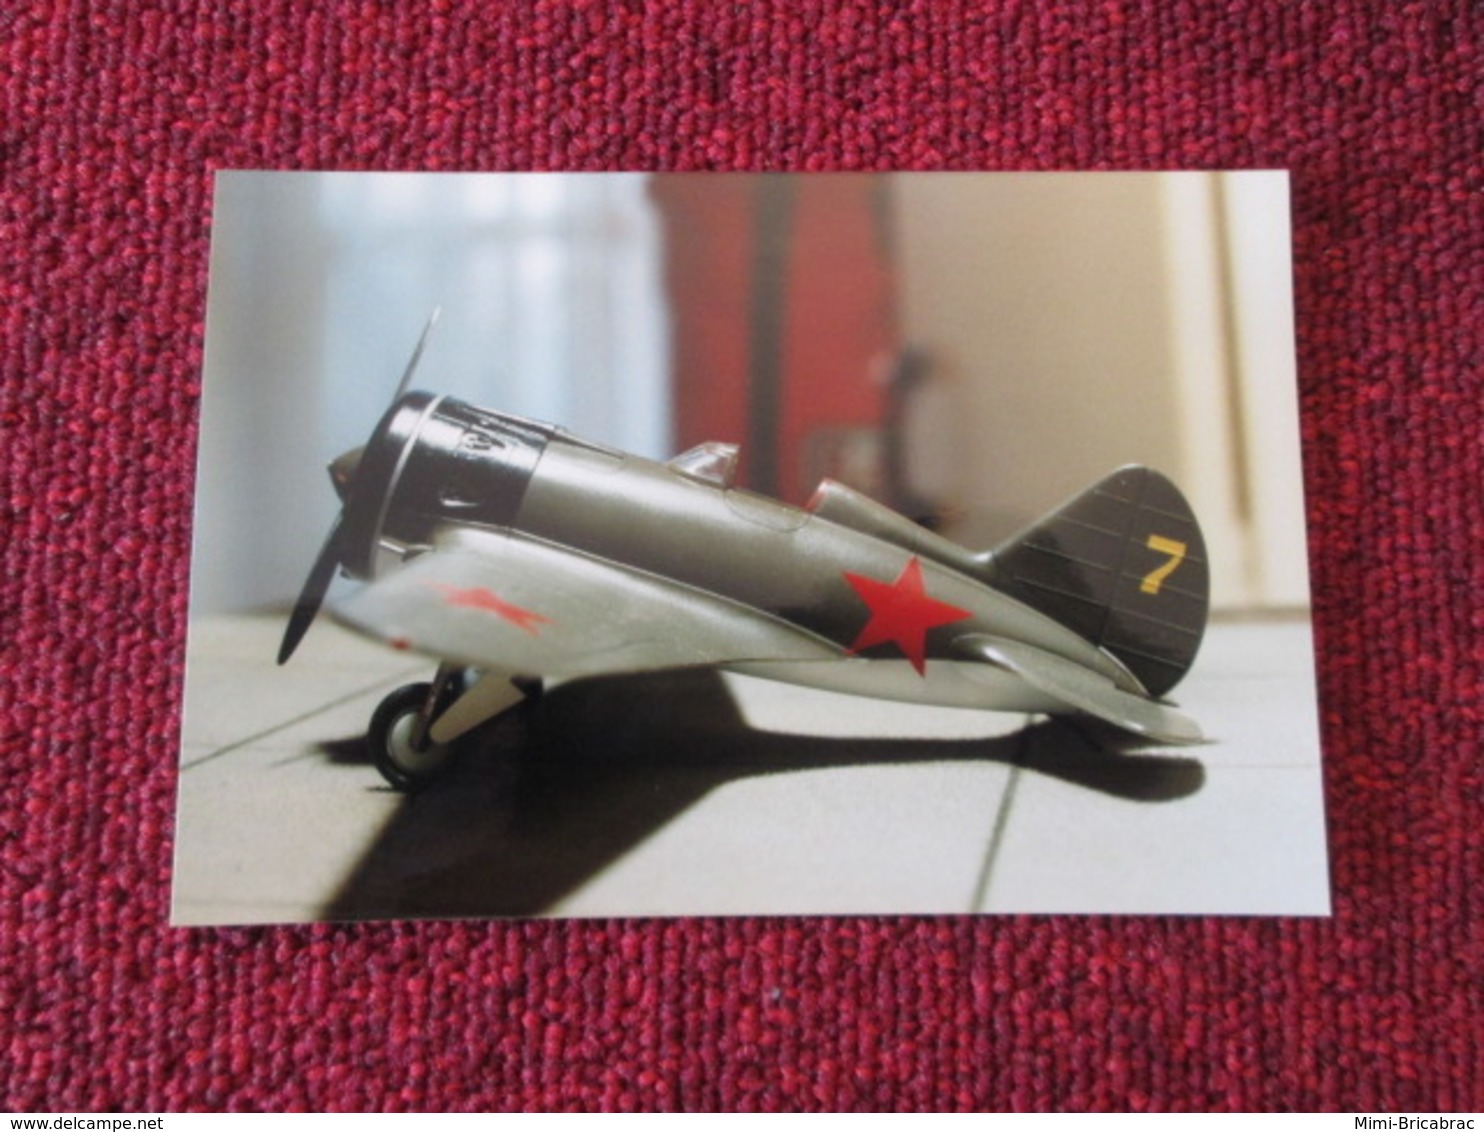 CAGI3 Format Carte Postale Env 15x10cm : SUPERBE (TIRAGE UNIQUE) PHOTO MAQUETTE PLASTIQUE 1/48e URSS POLIKARPOV I-15 - Vliegtuigen